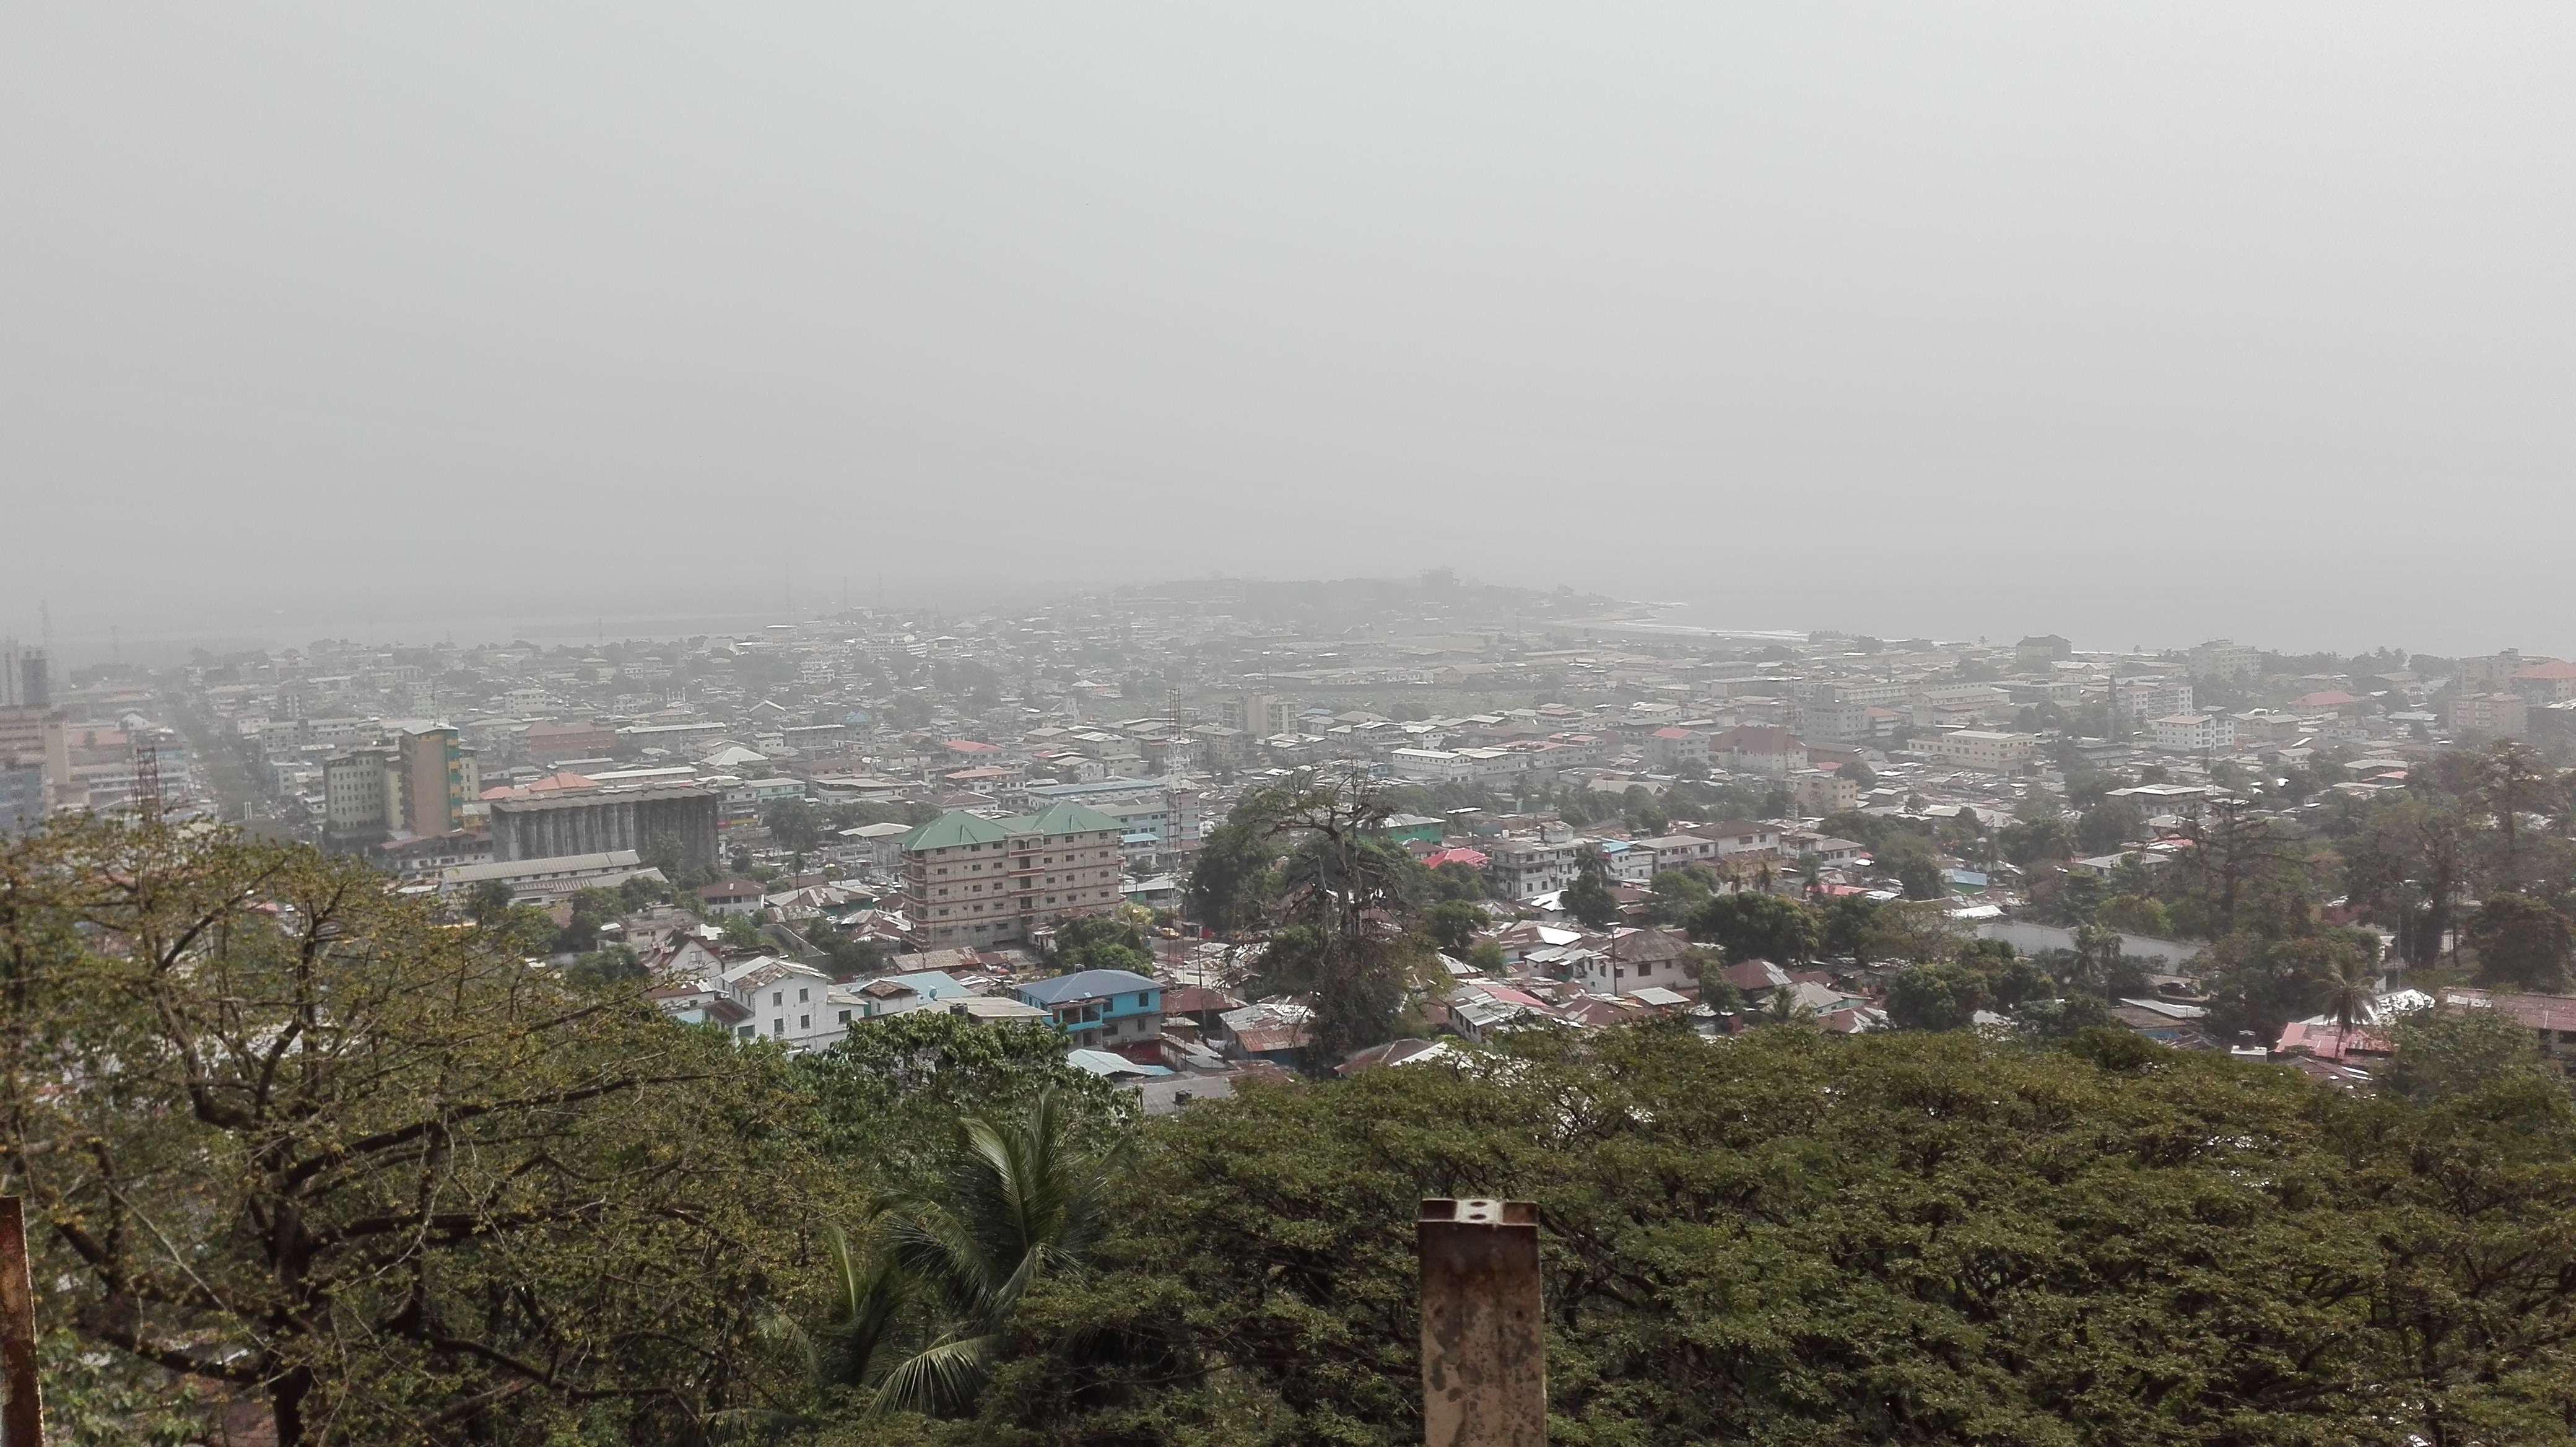 WEST POINT, Liberia